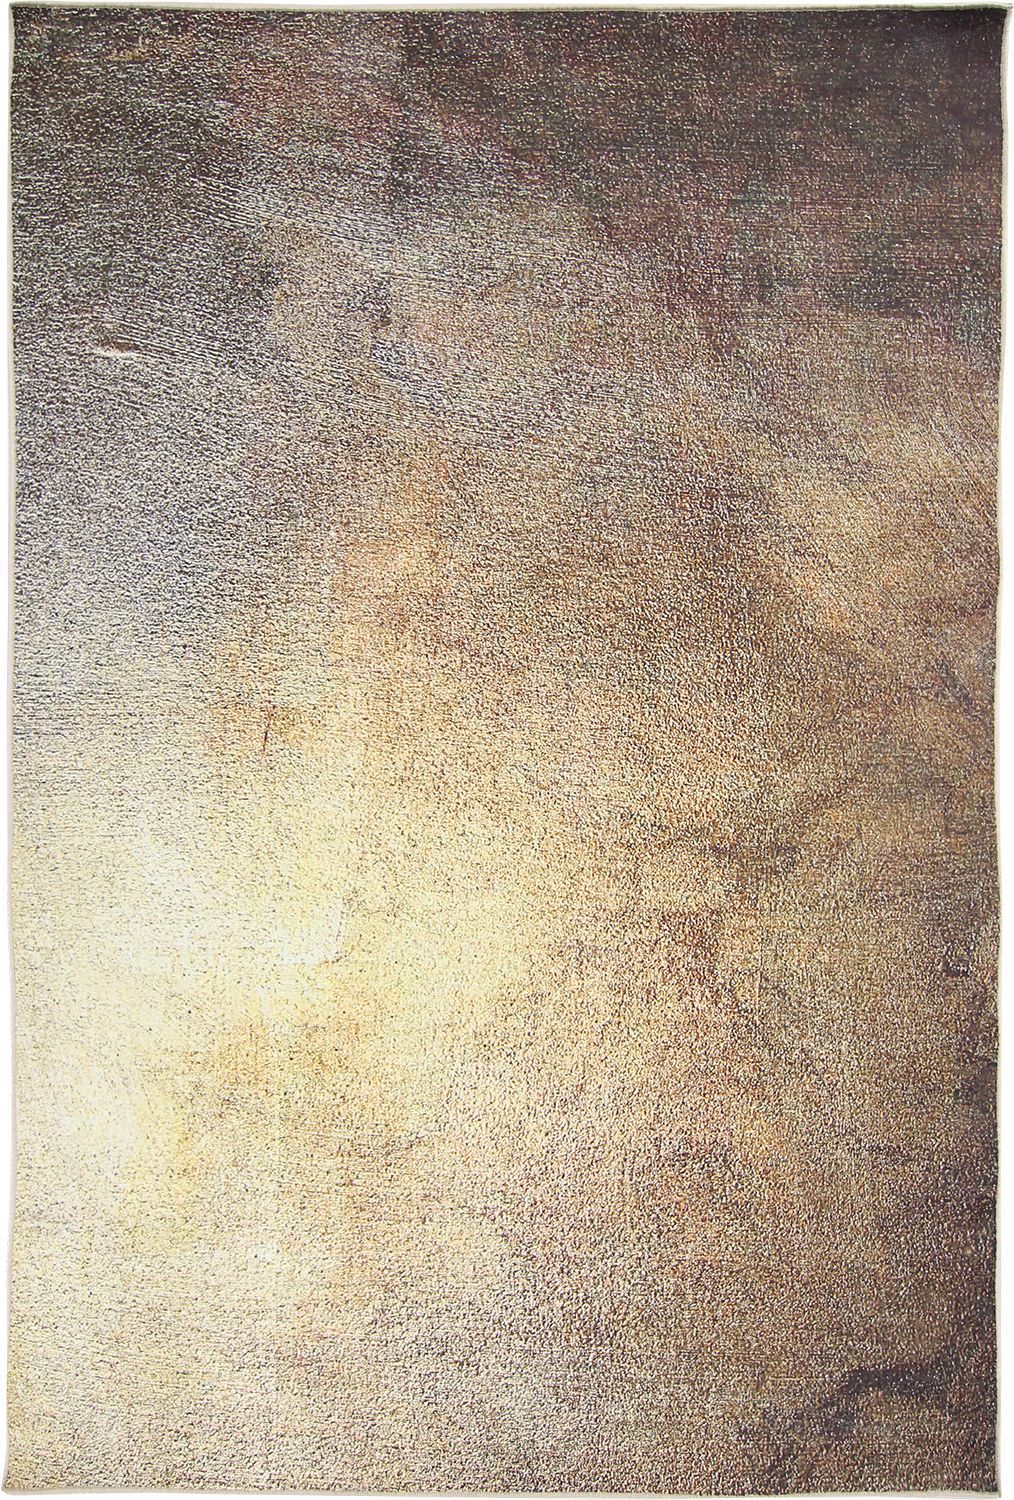 Wilton rug - Oristano (brown/gold)